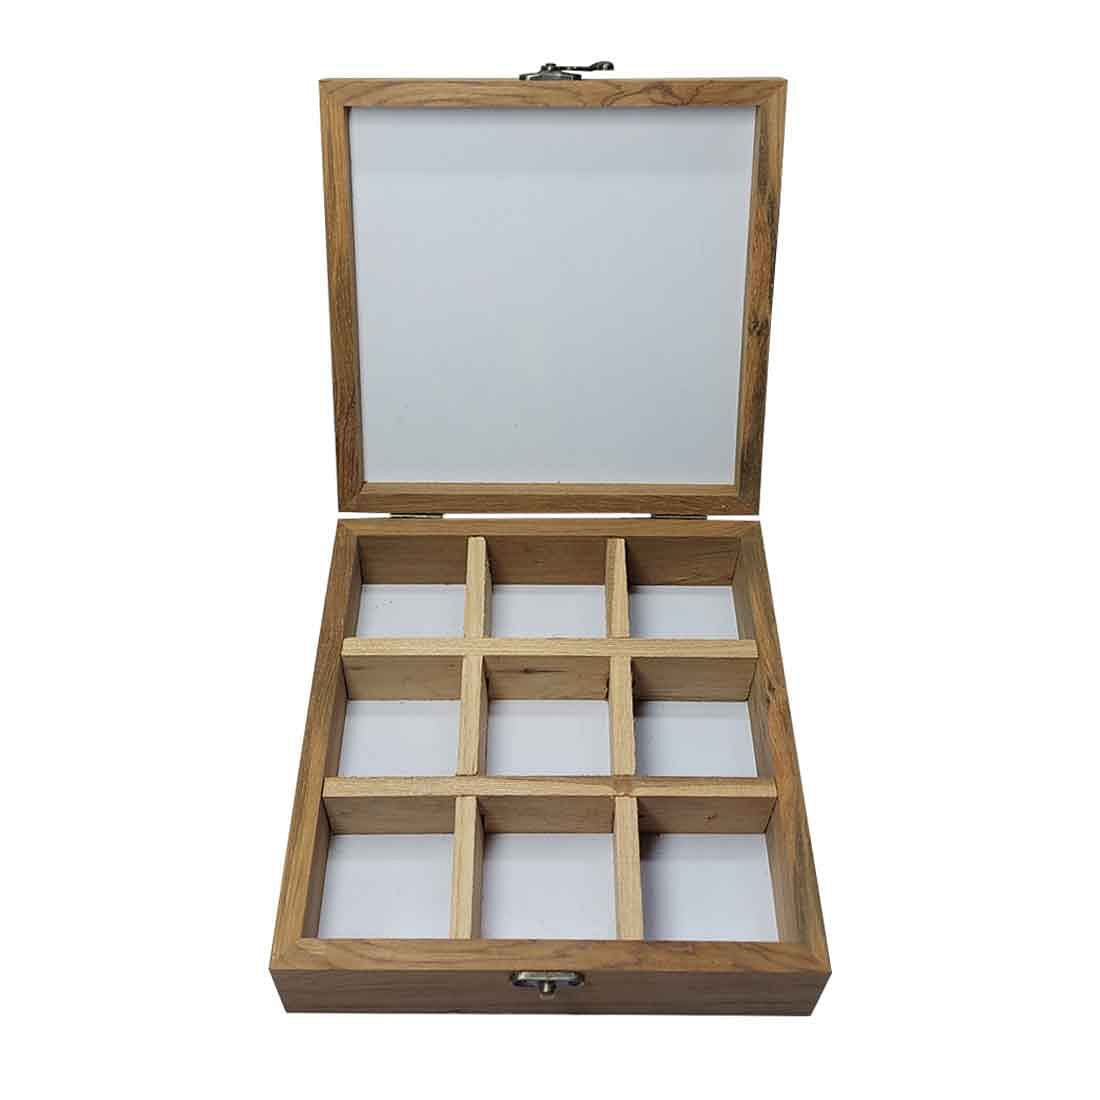 Customized Jewellery Organiser Box With Name - Dark Watercolor Nutcase